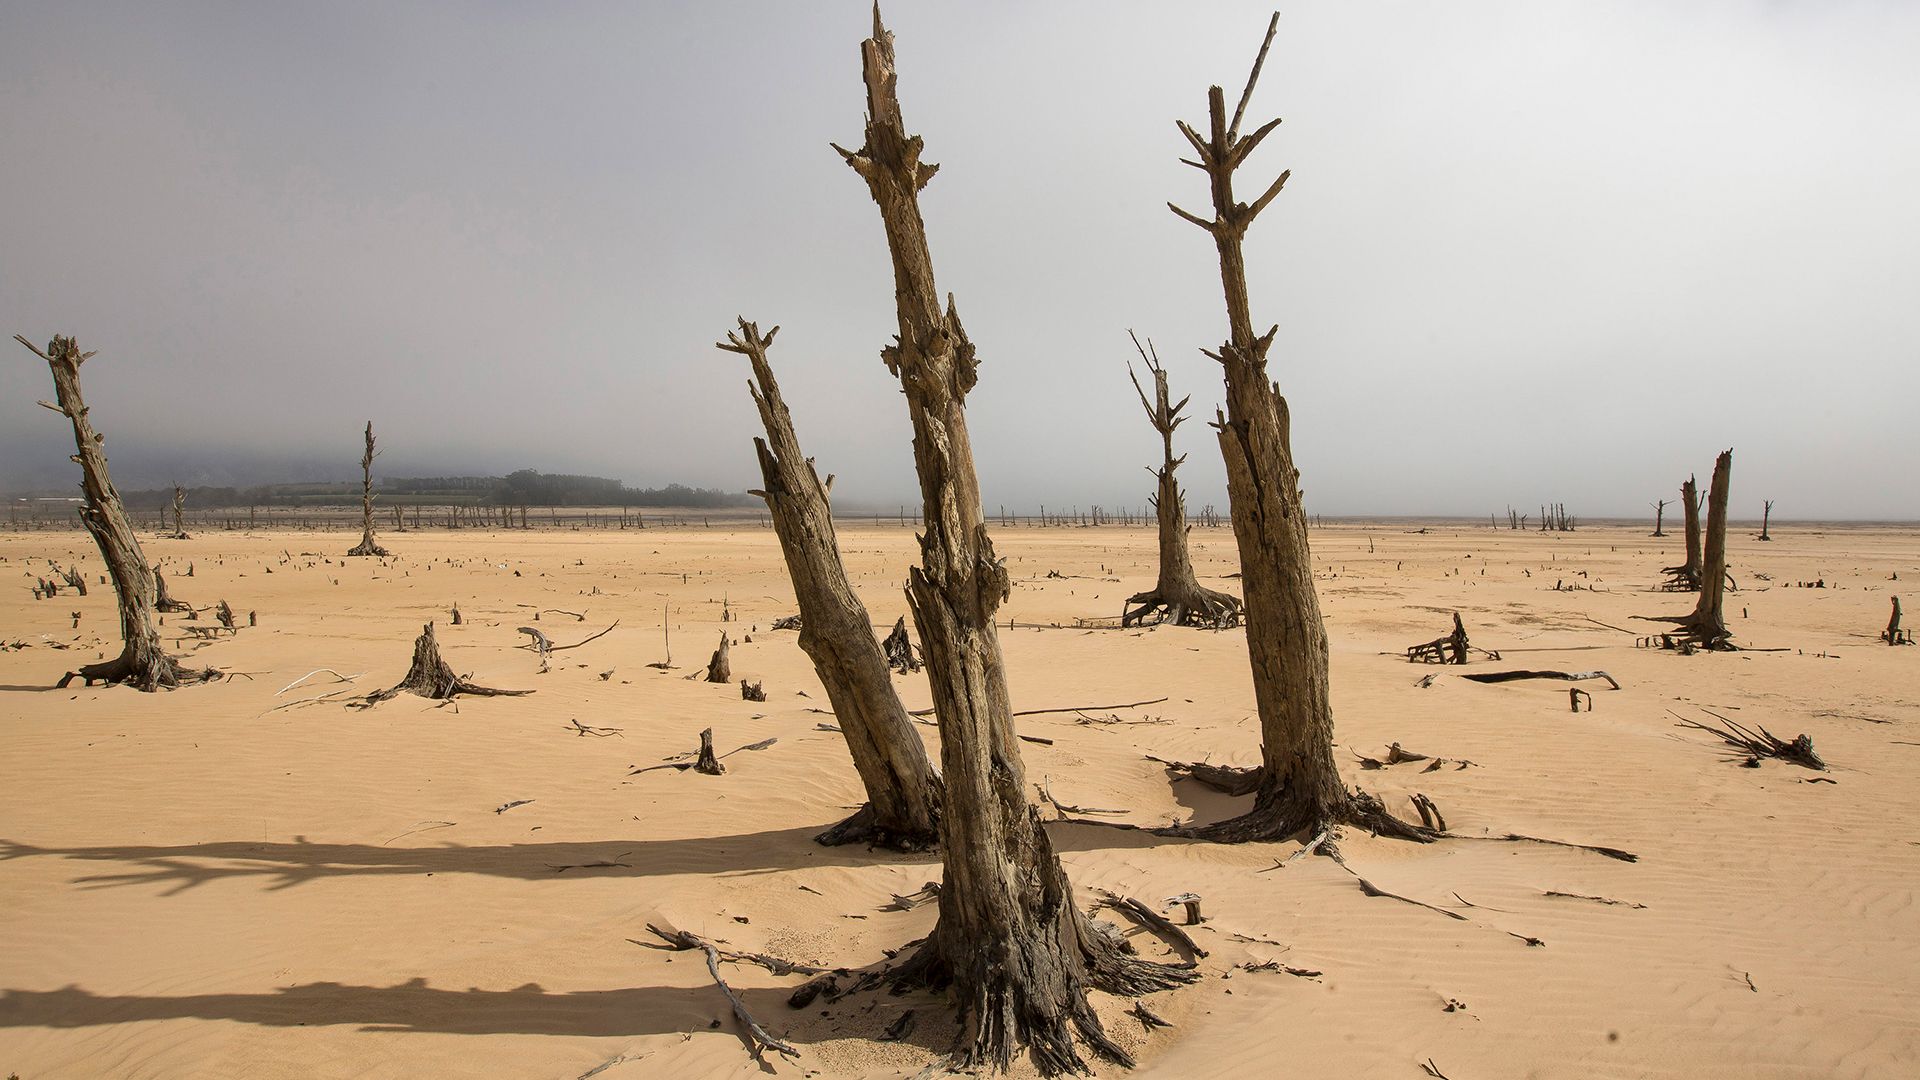 Abgestorbene Bäume an dem in weiten Teilen trockenen Speichersee Theewaterskloof in Südafrika